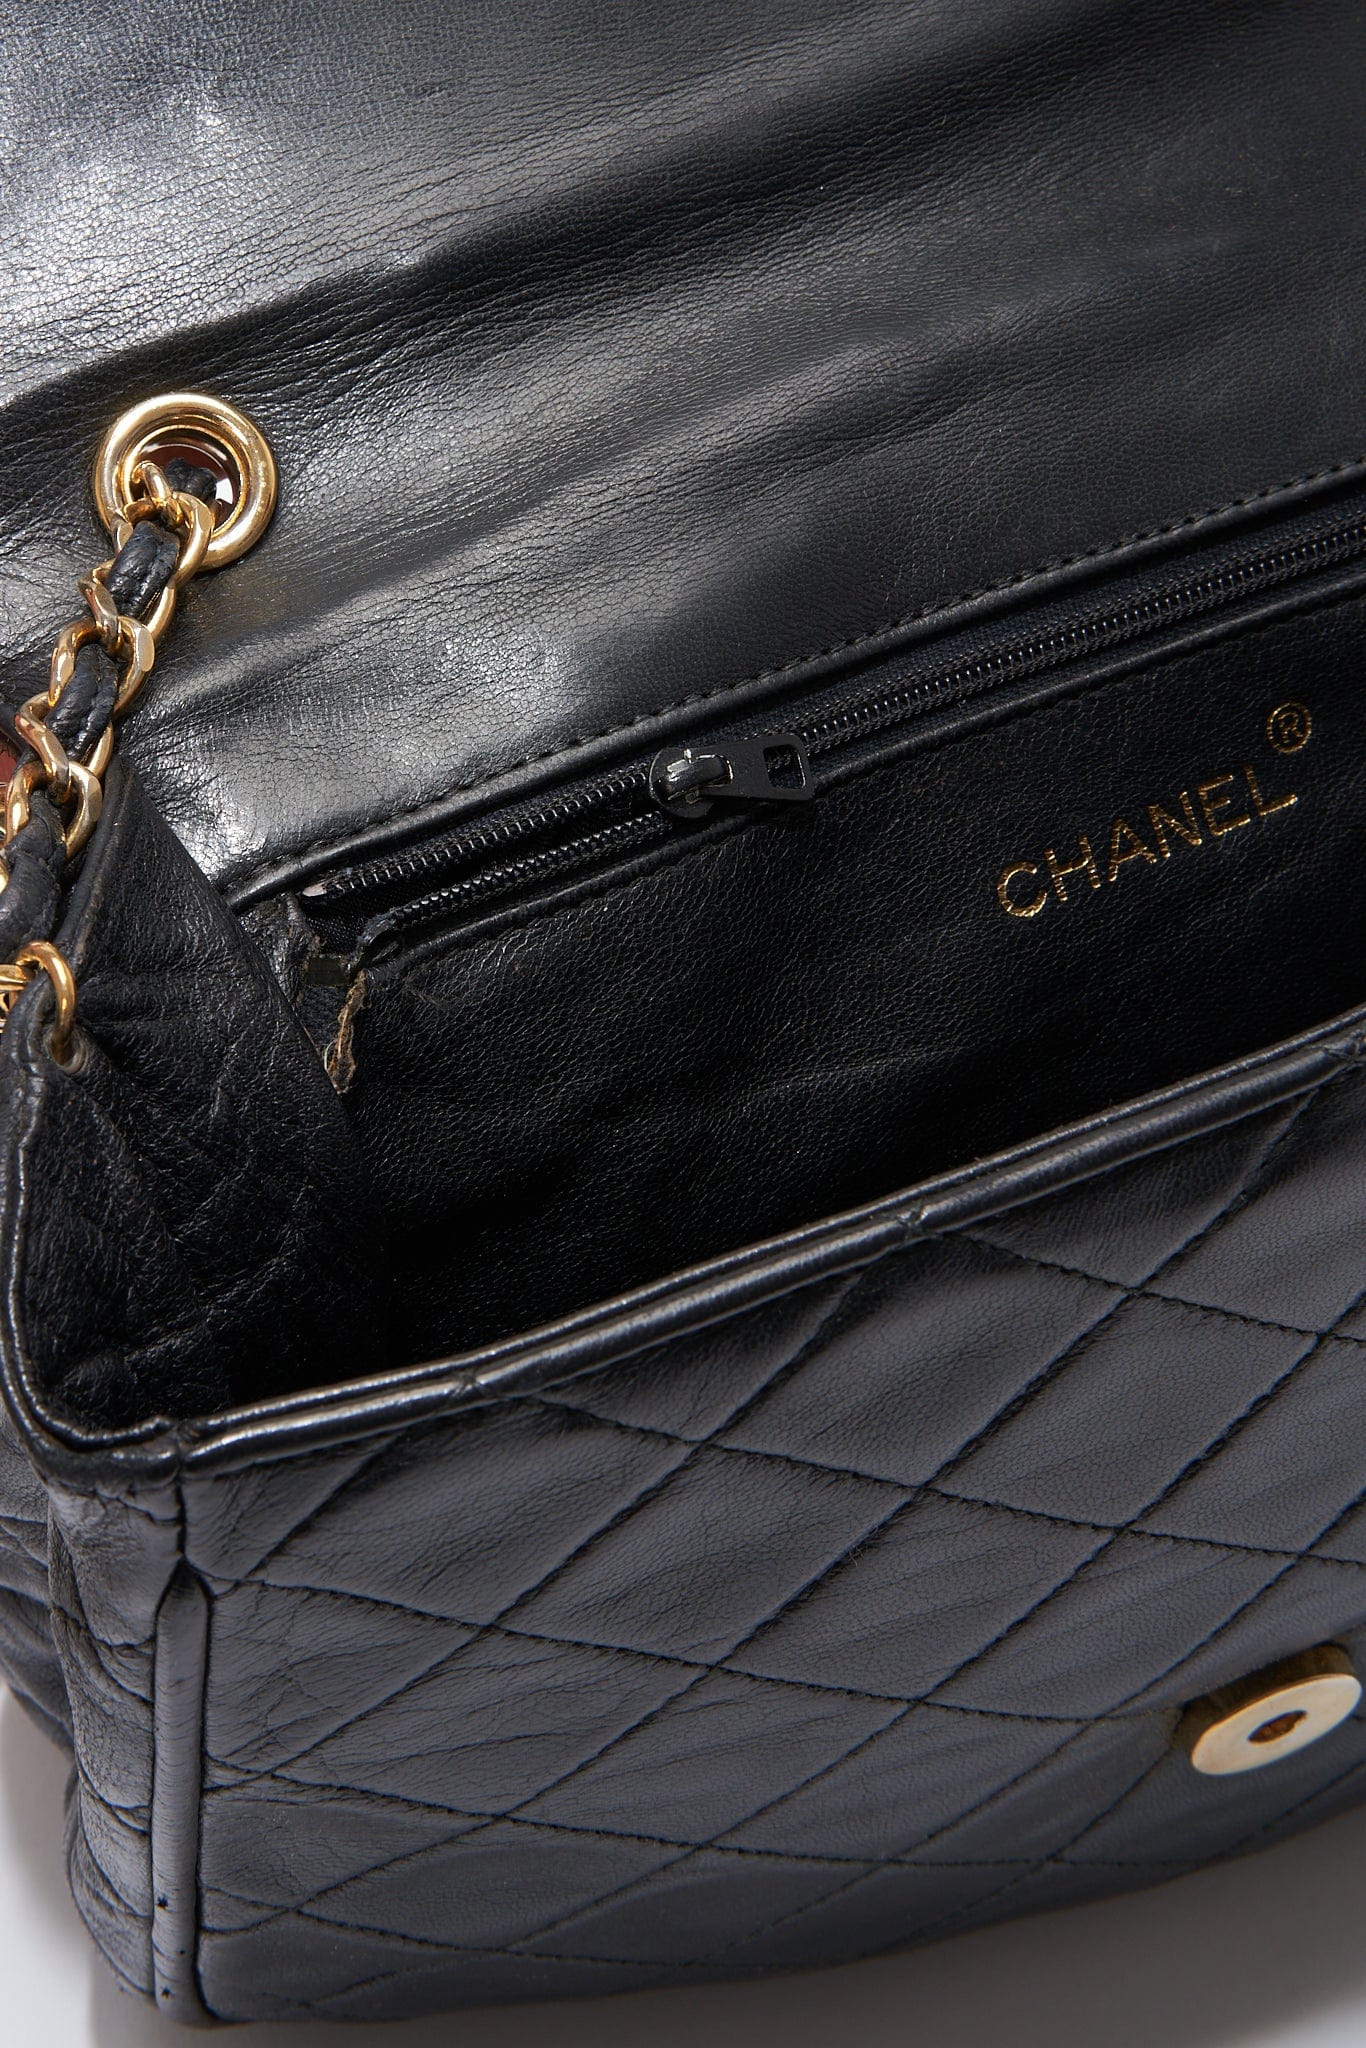 Chanel Classic Chevron M/L Medium Double Flap So Black Lambskin